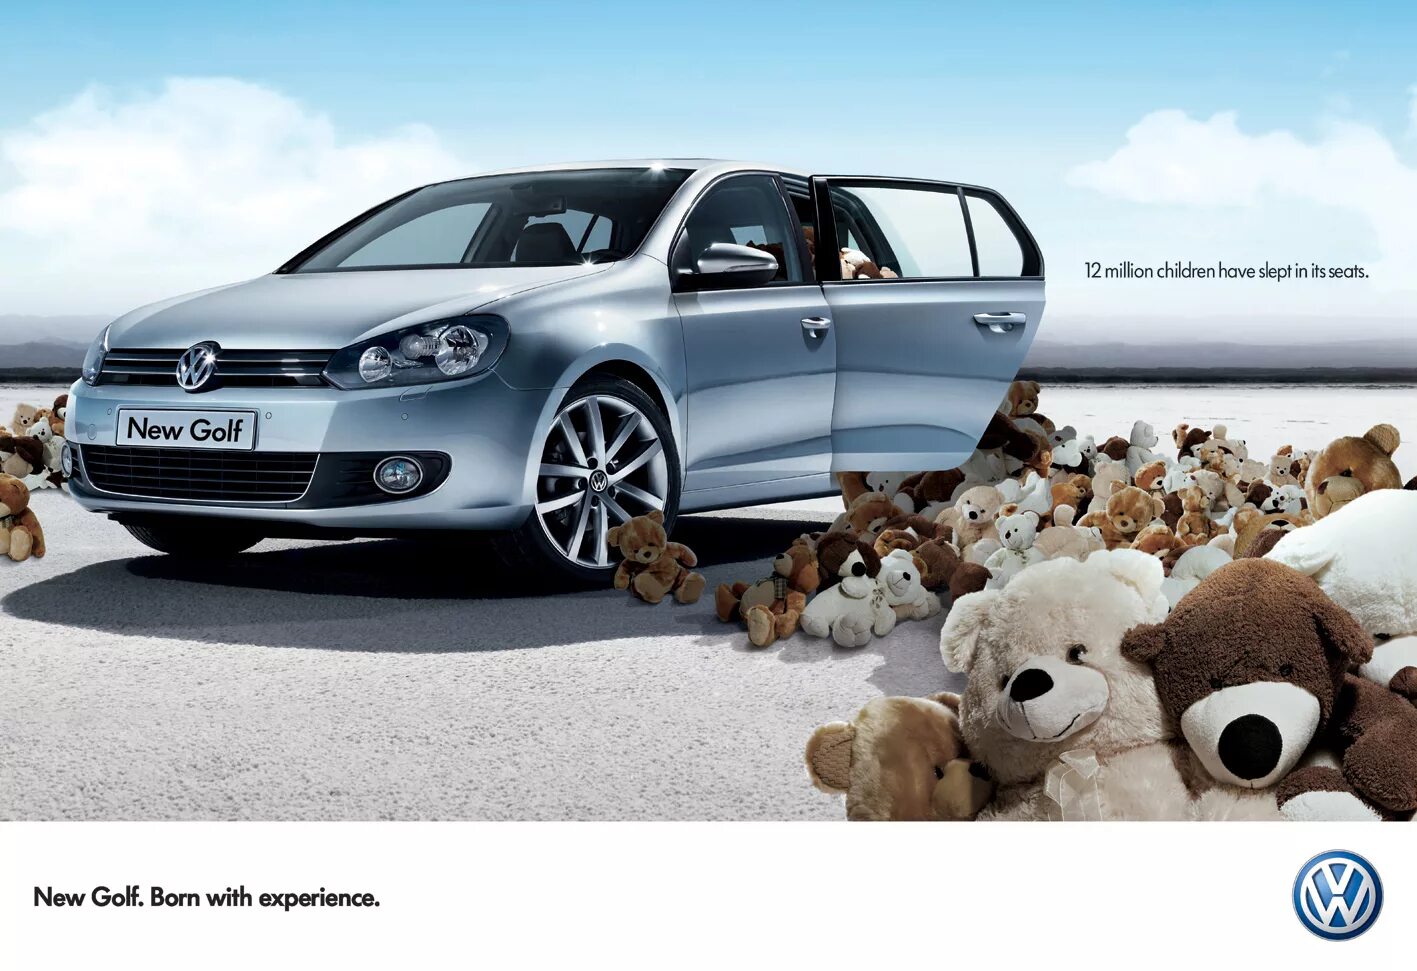 Реклама автомобиля. Реклама Volkswagen. Реклама автомобиля Фольксваген. Реклама на машине. Страшная реклама авто